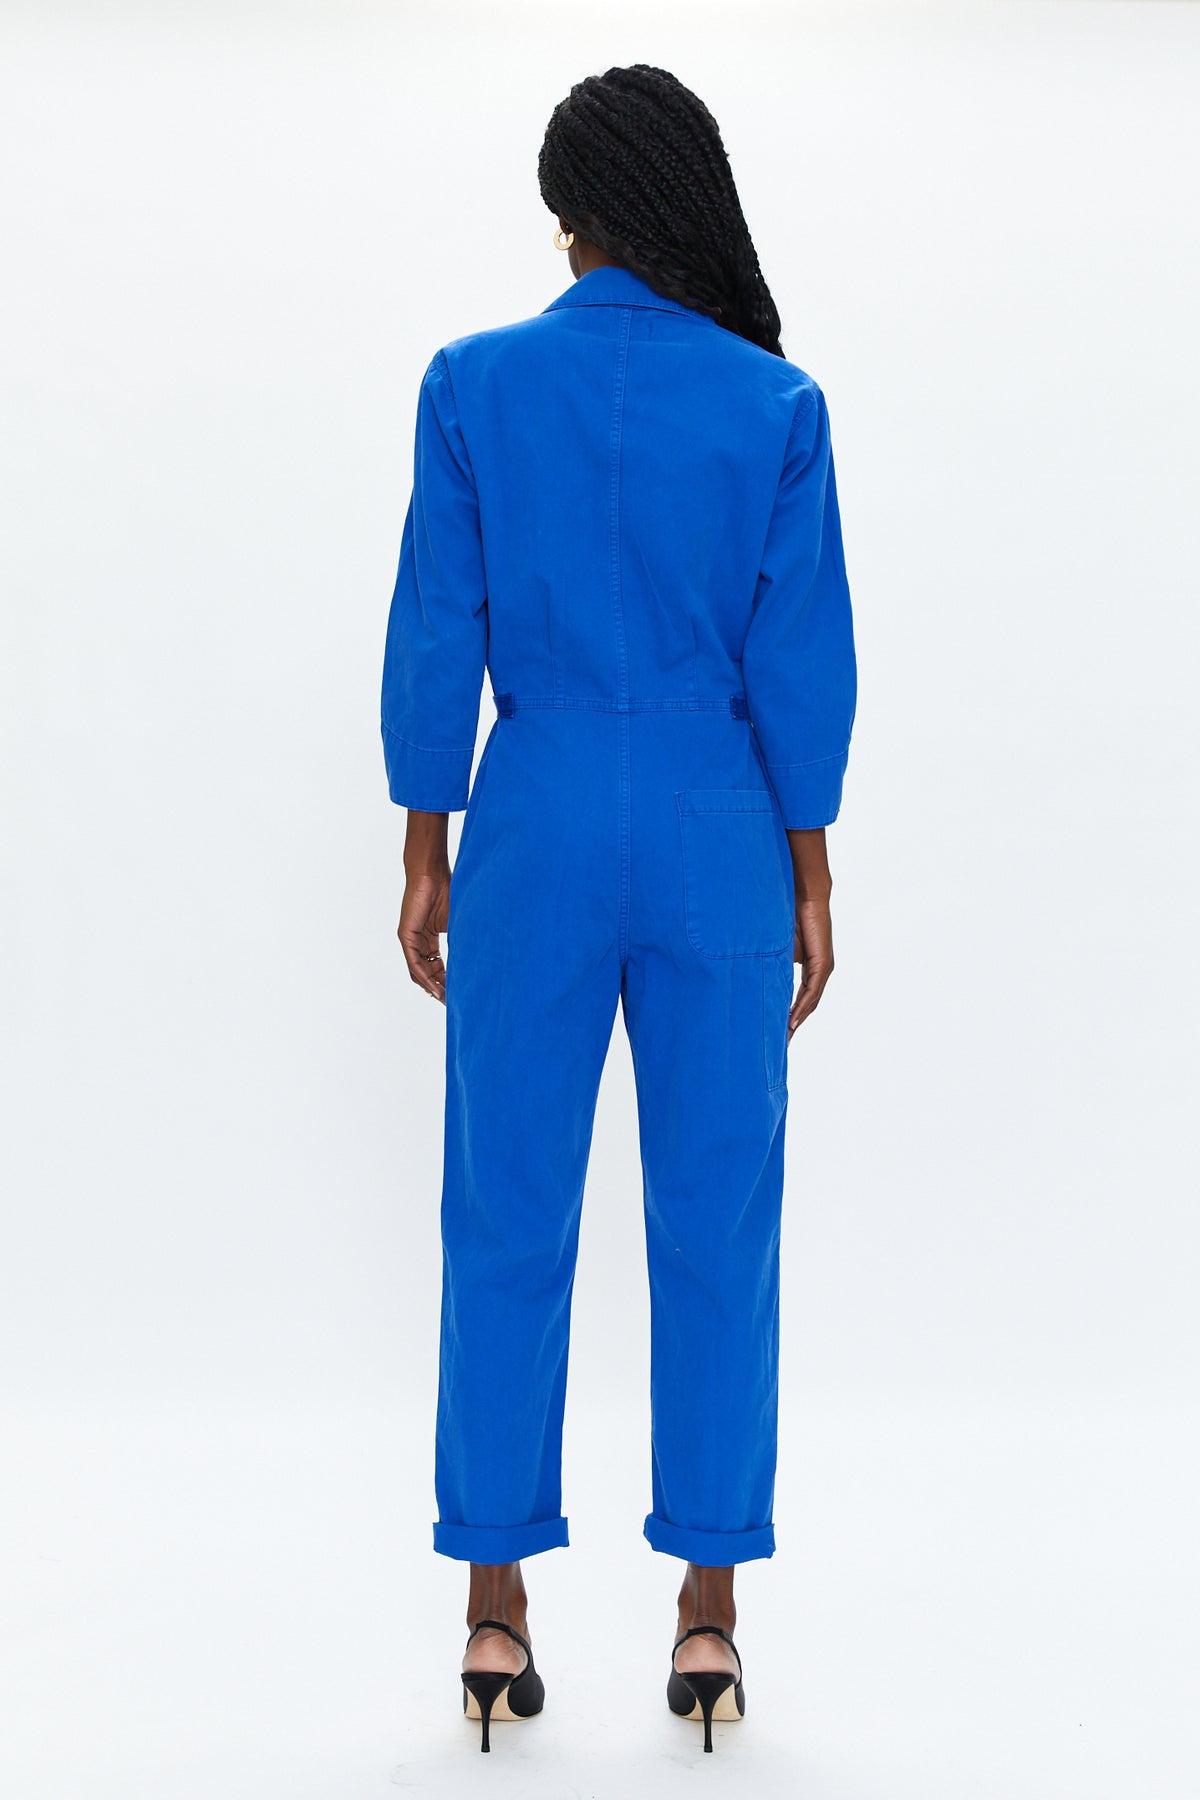 Tanner Long Sleeve Field Suit - Cobalt